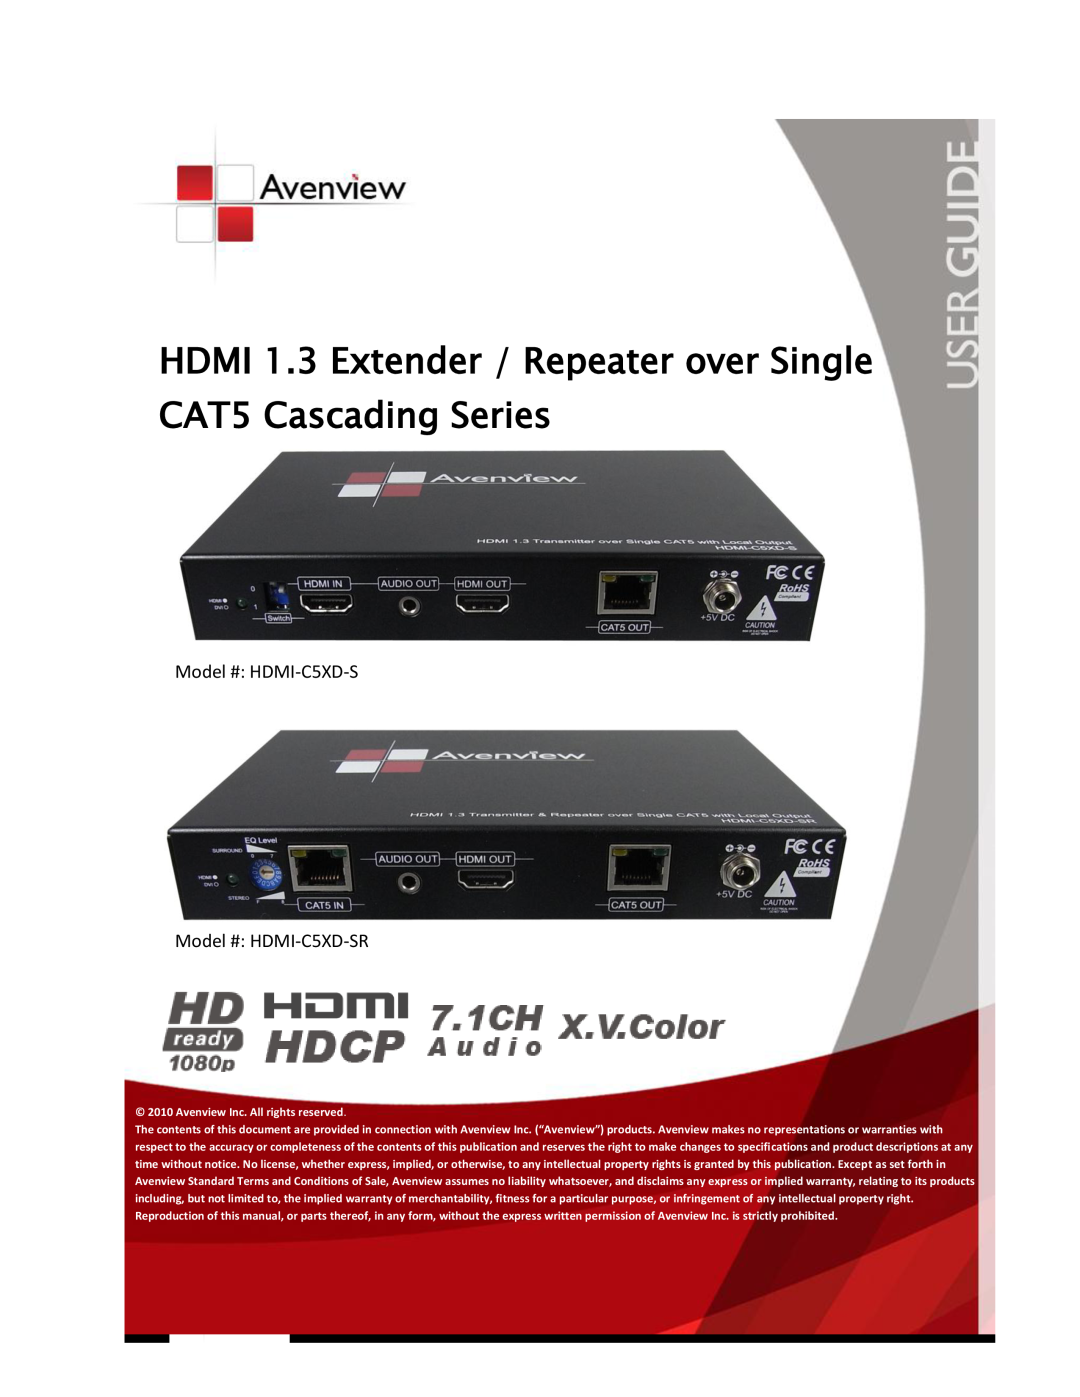 Avenview specifications Model # HDMI-C5XD-S Model # HDMI-C5XD-SR 